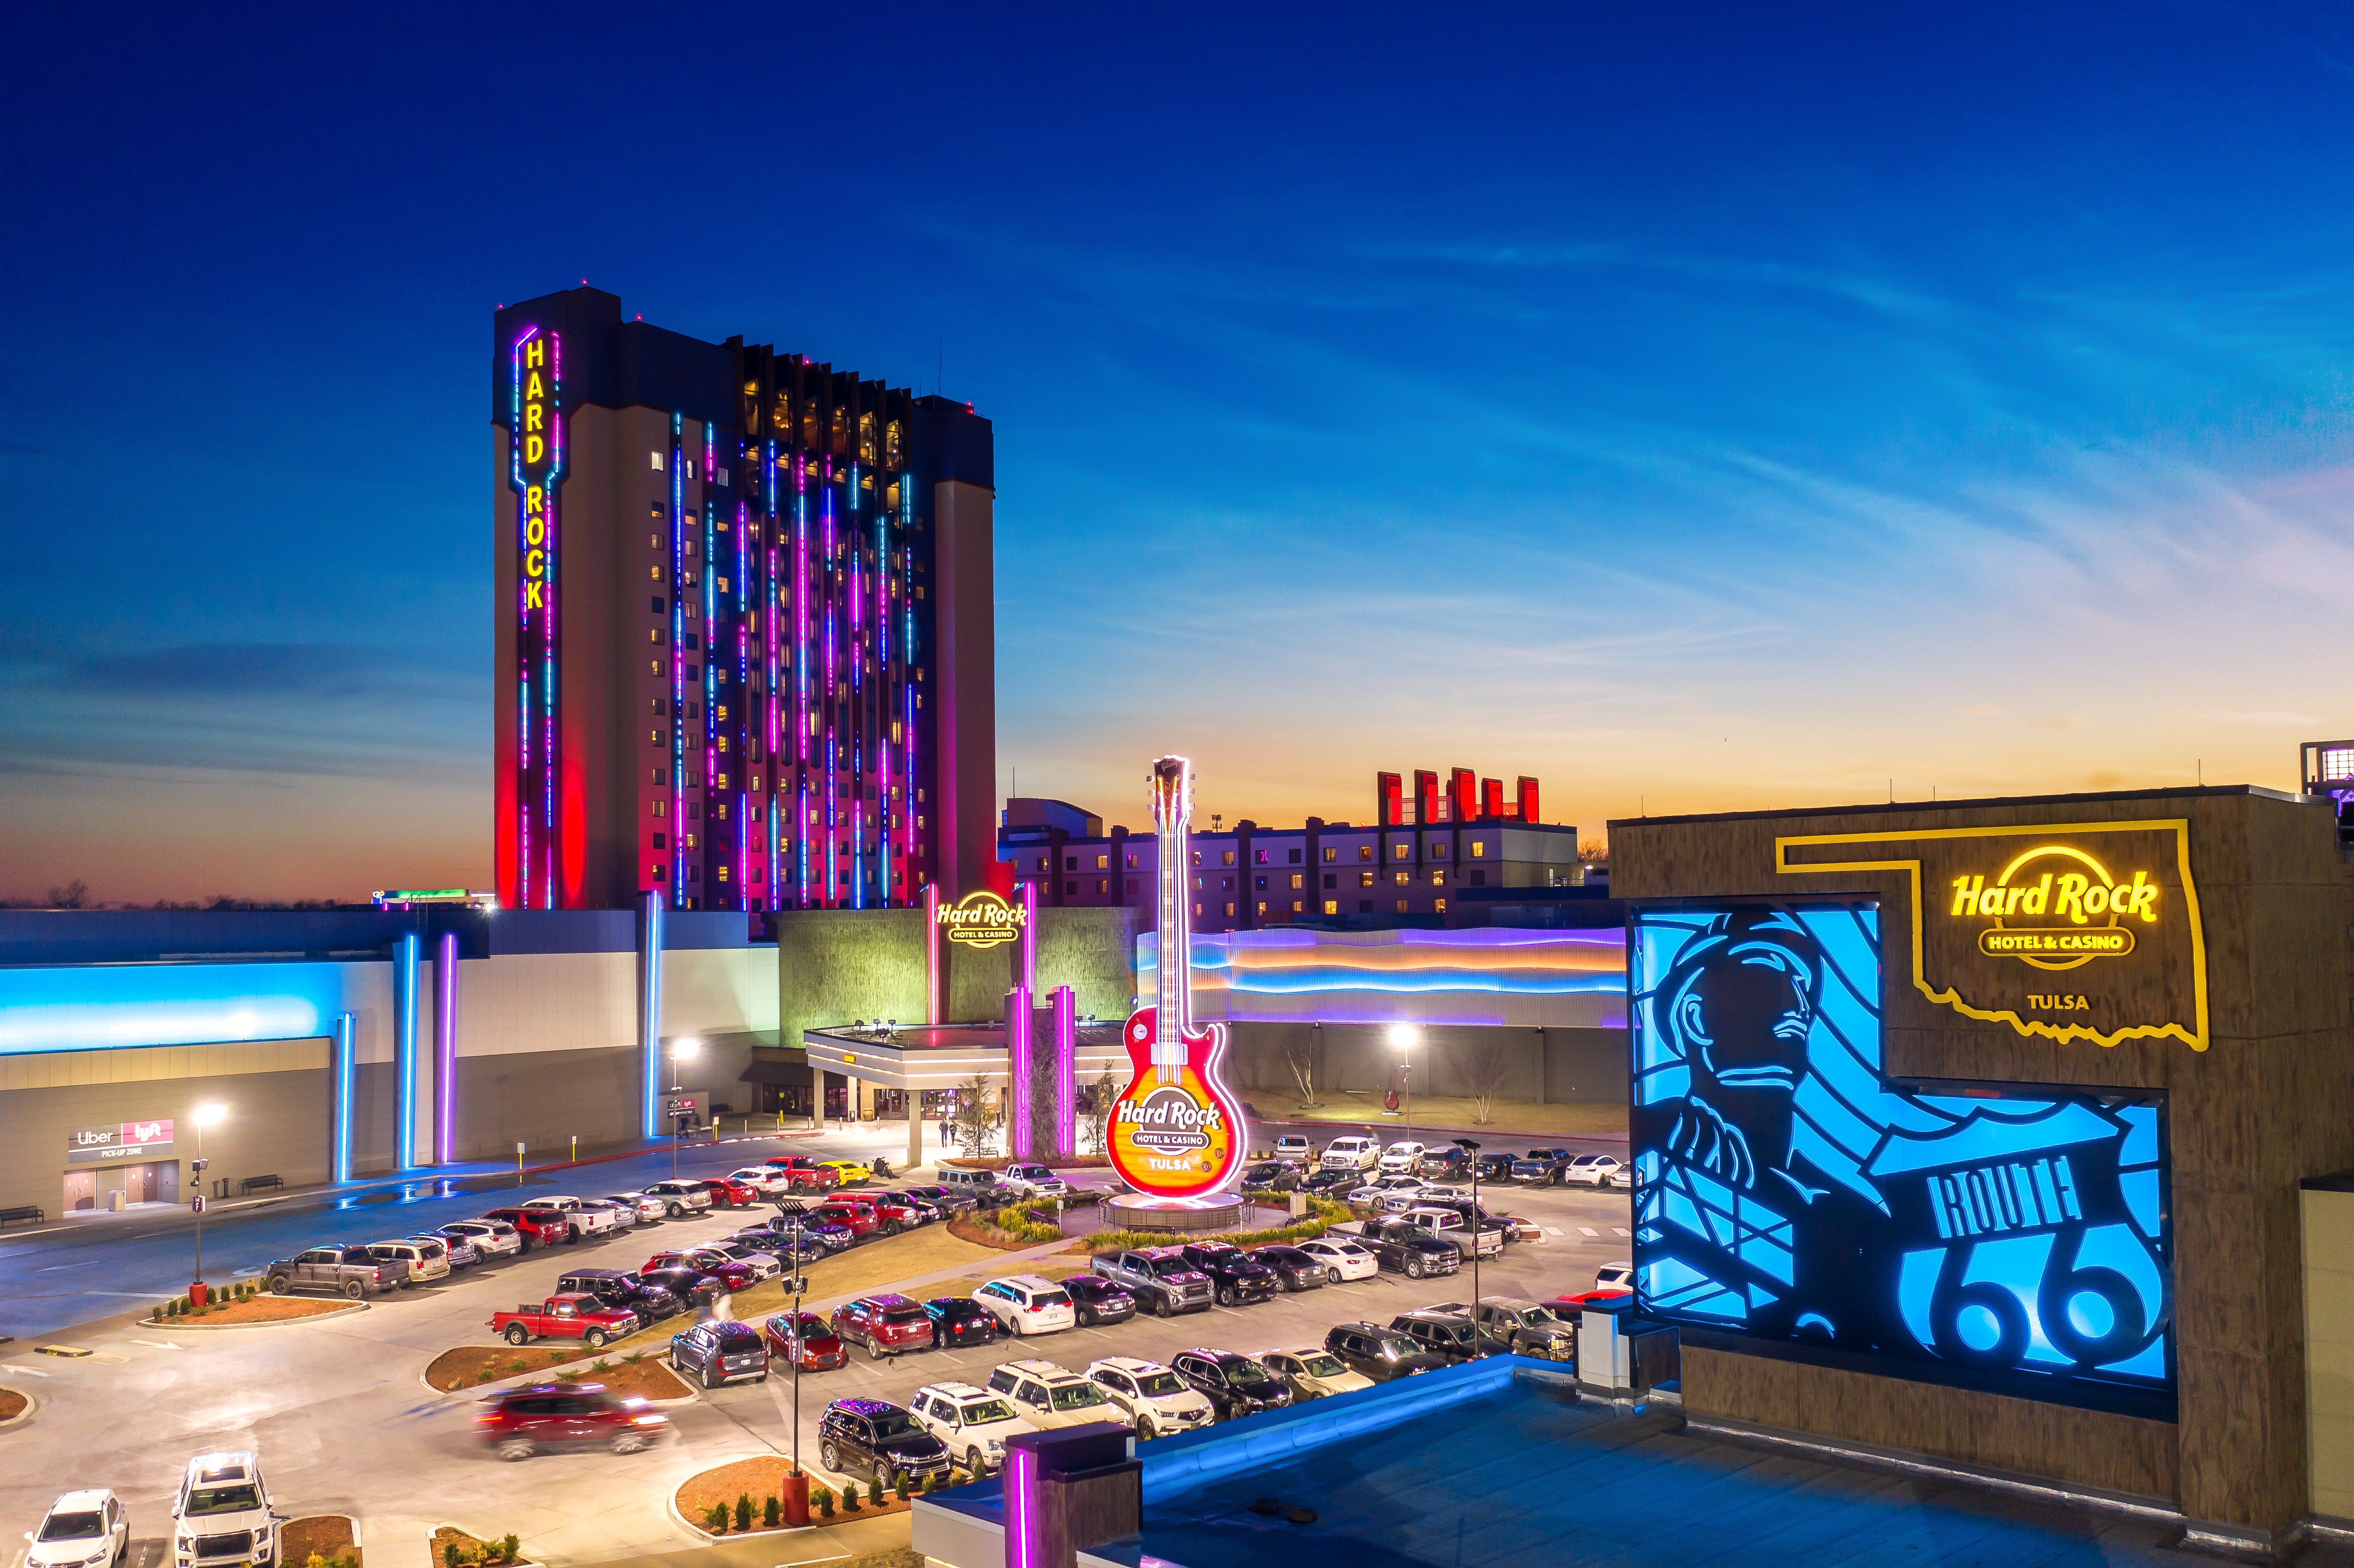 Building view of Hard Rock Hotel & Casino Tulsa